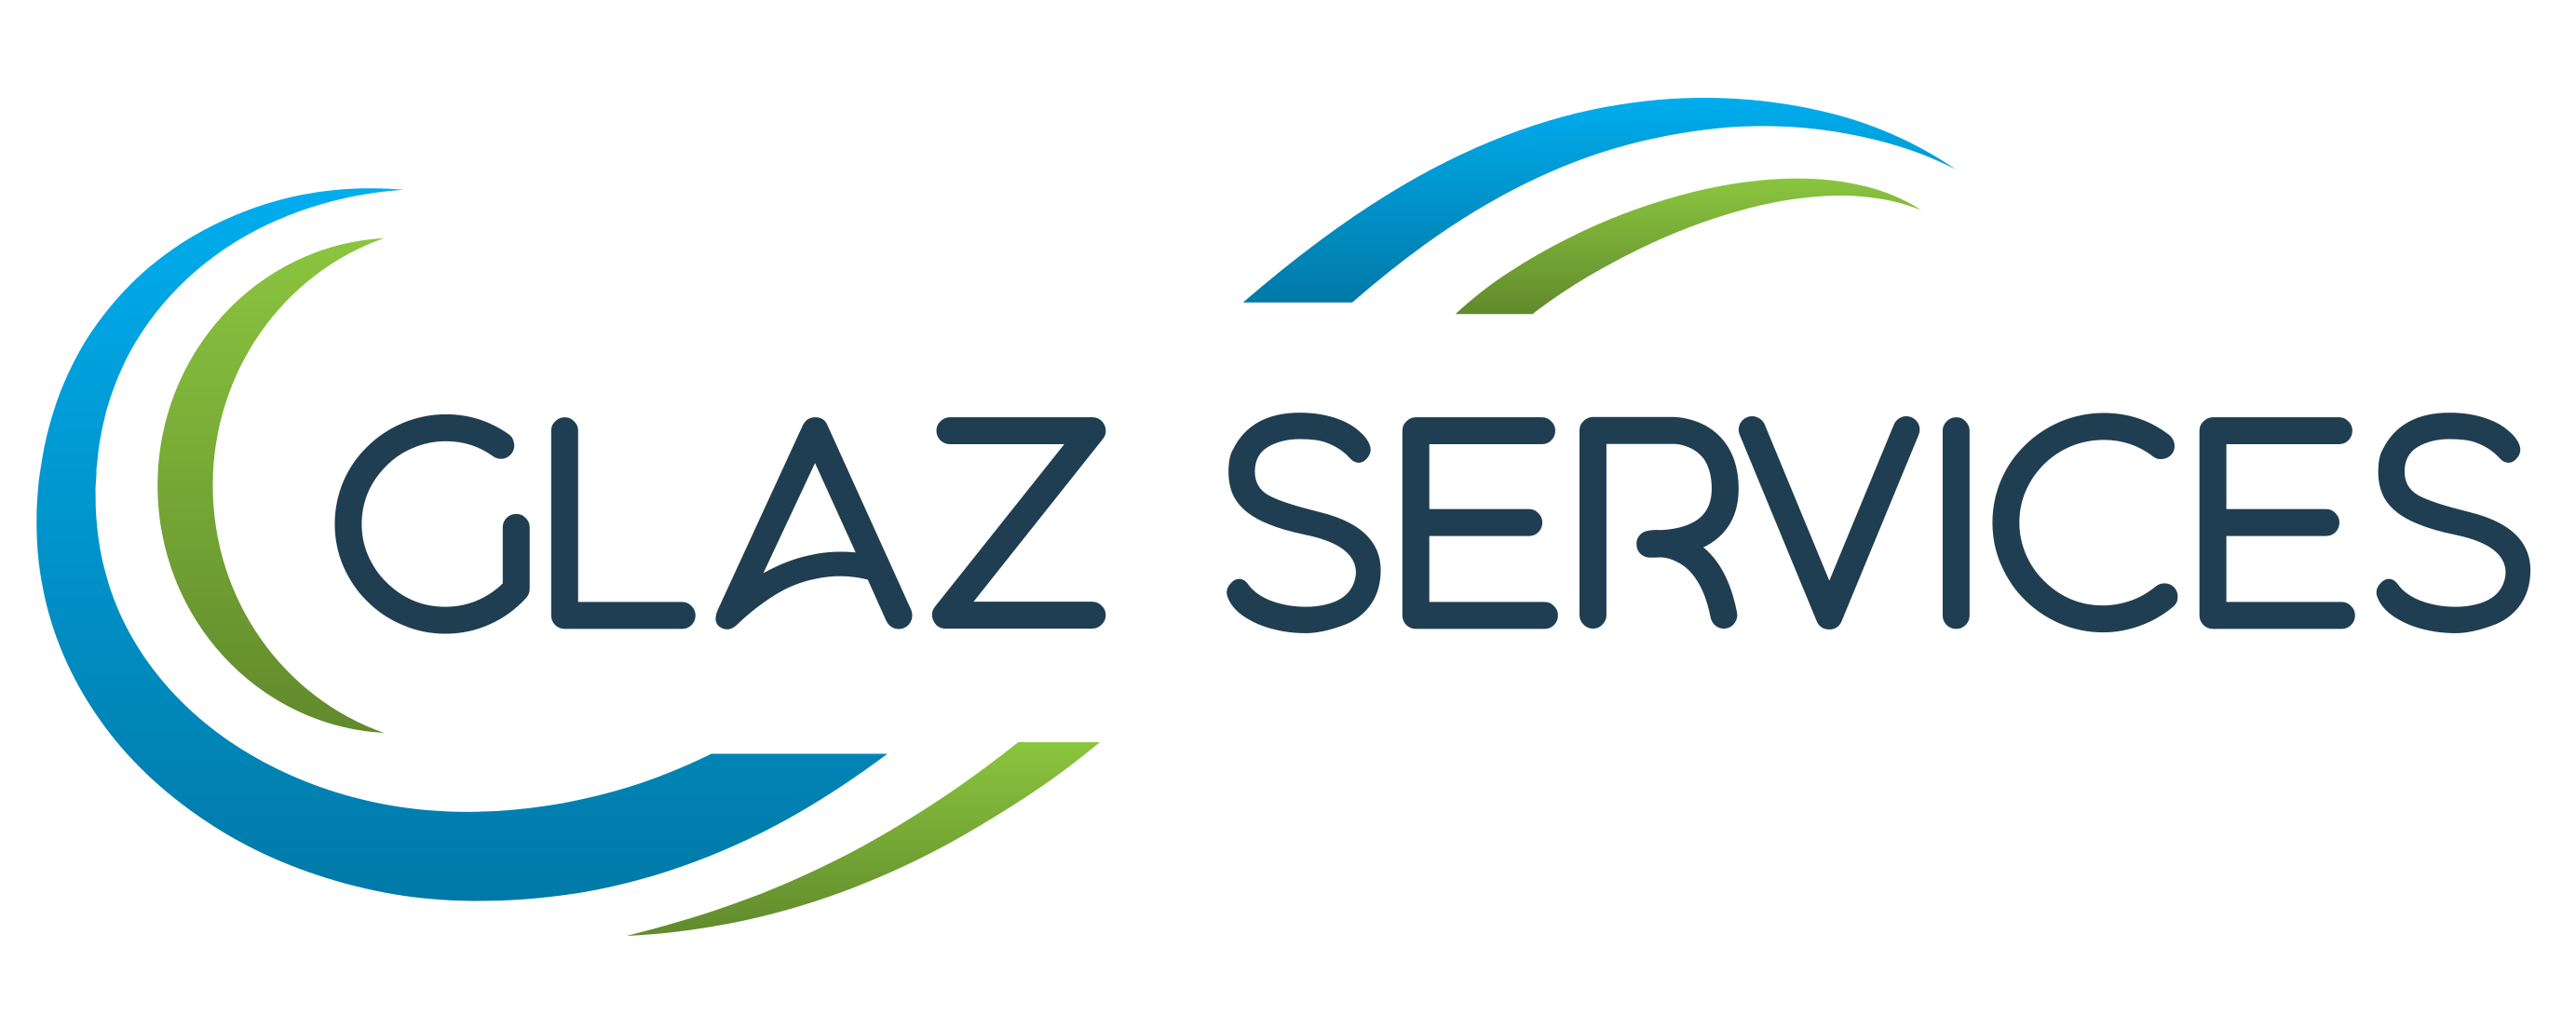 Glaz Services